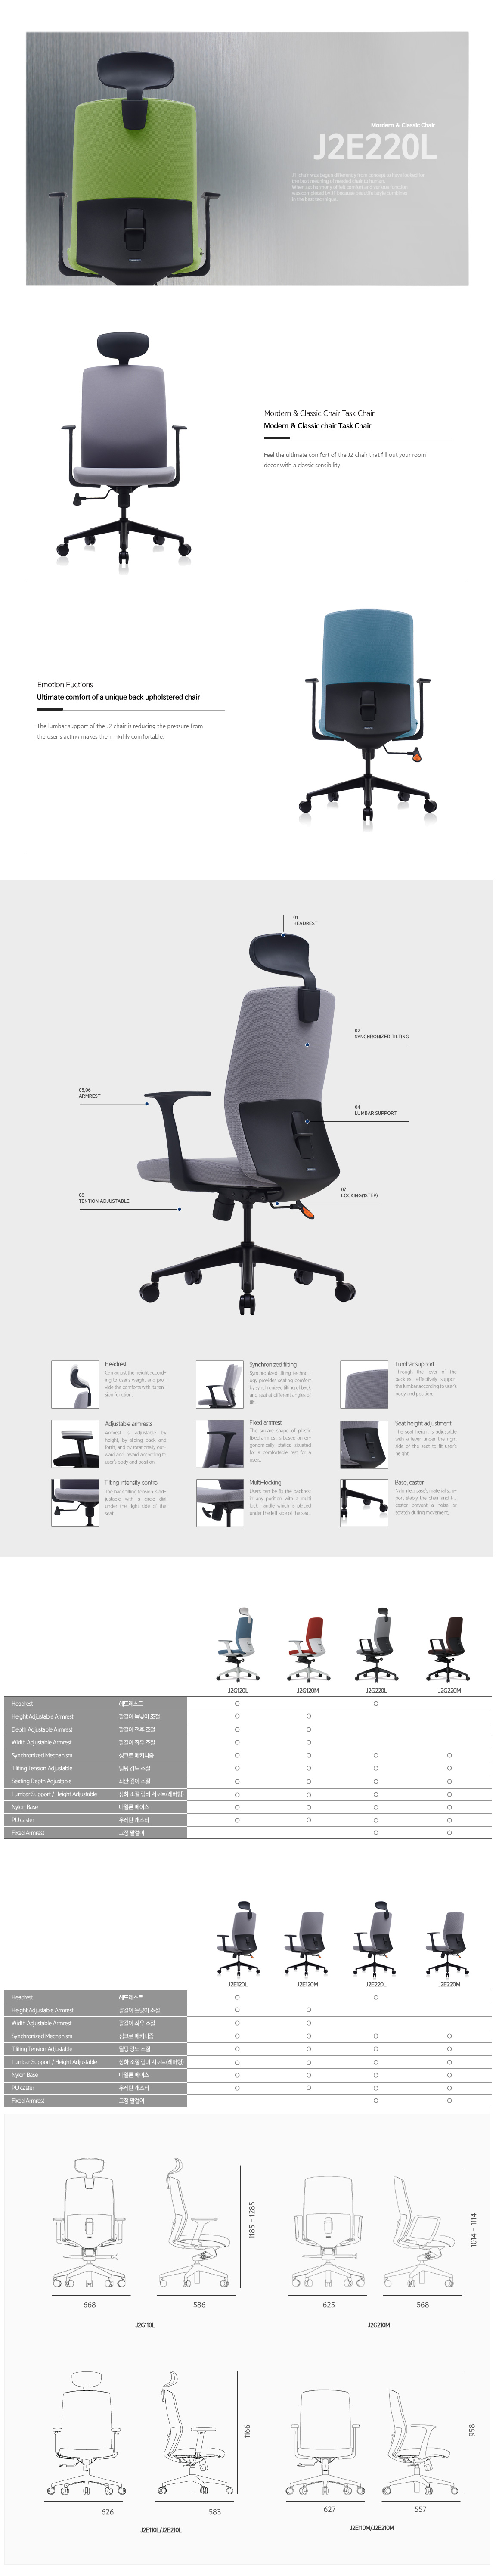 Luxdezine Office Chairs Furniture J2E220L